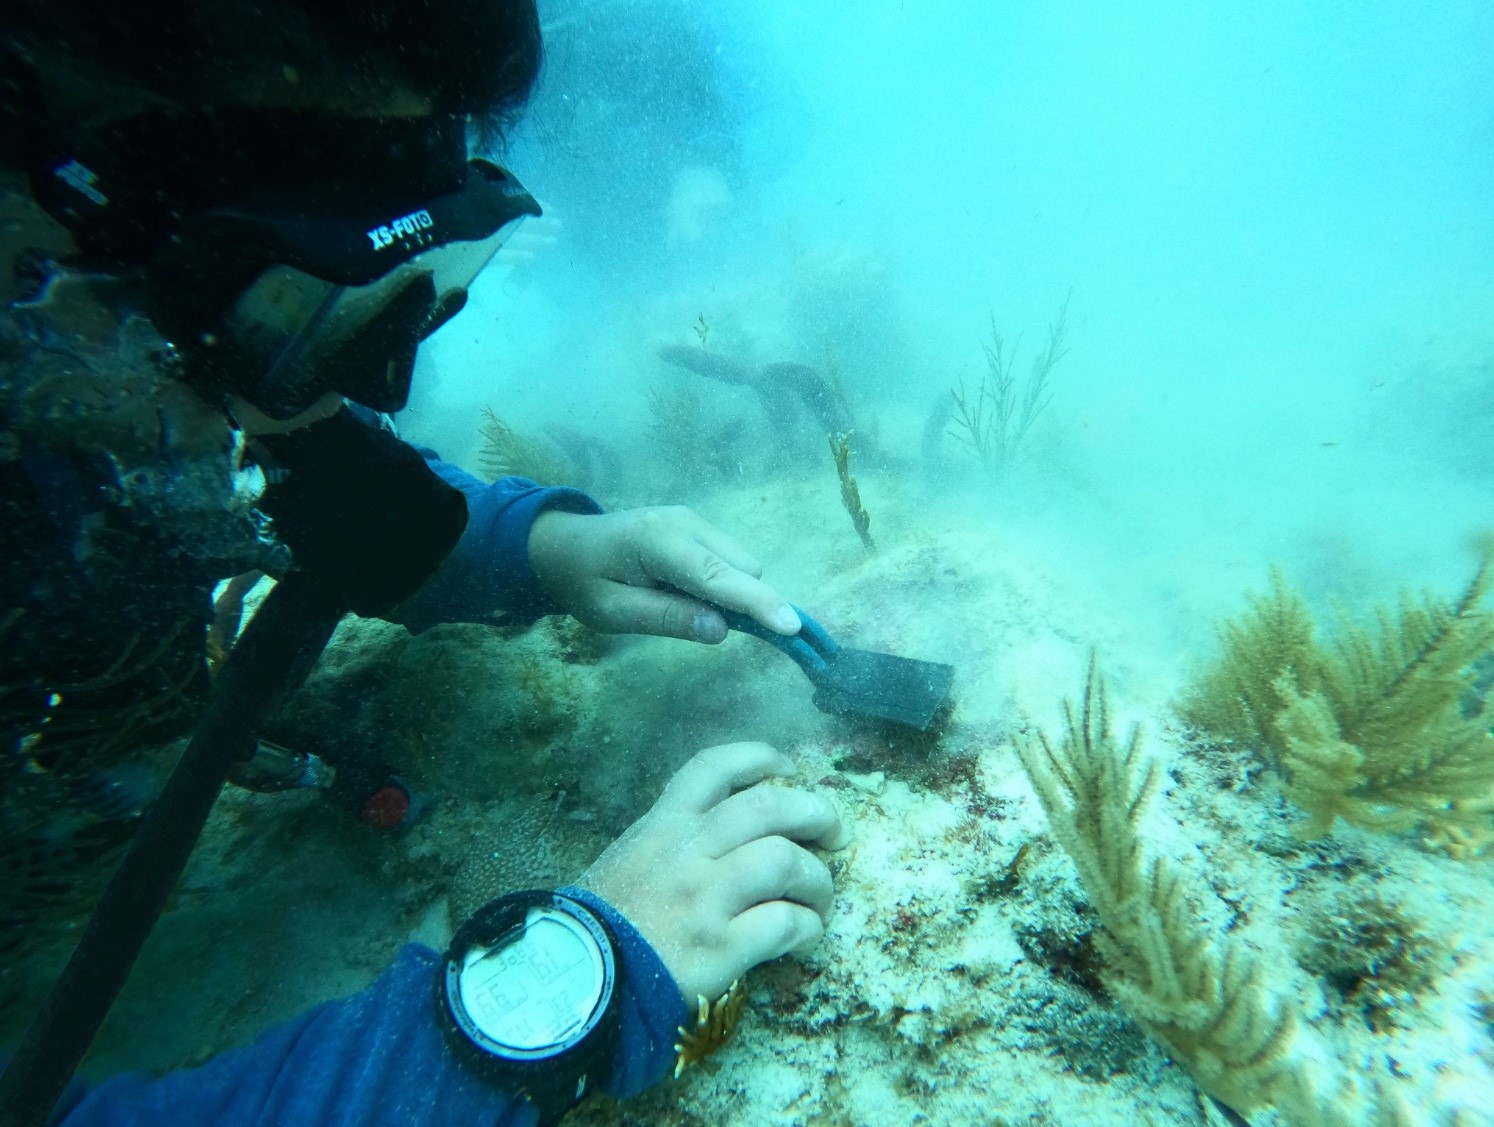 Kylie transplanting coral in the Florida Keys